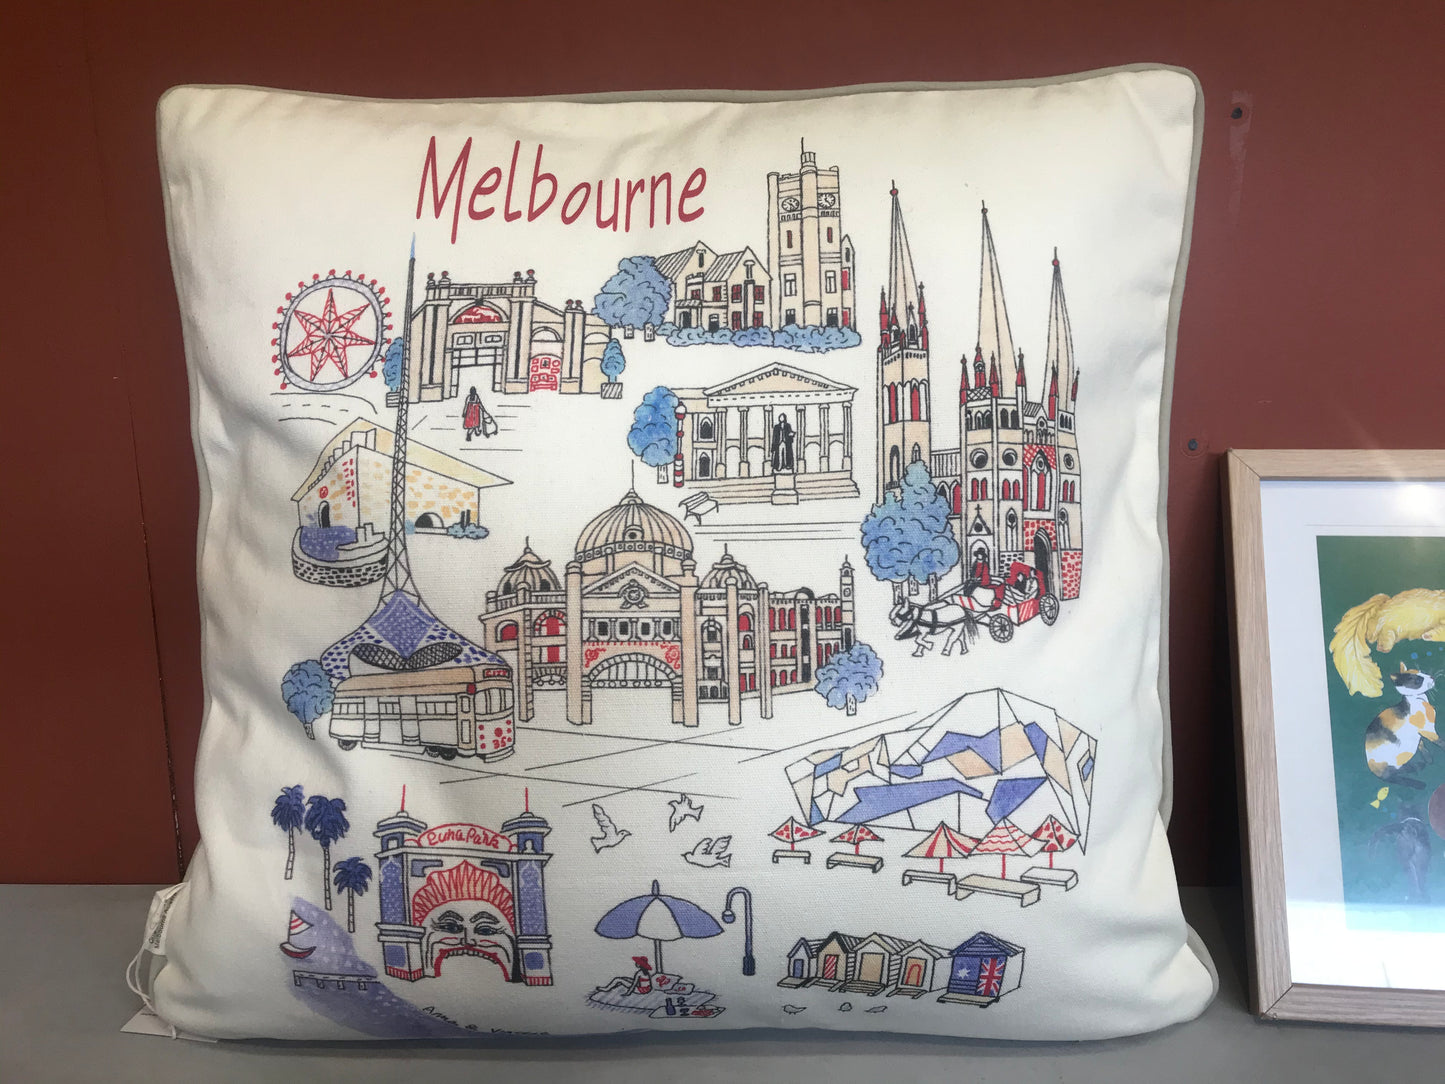 Melbourne city2 cushion cover